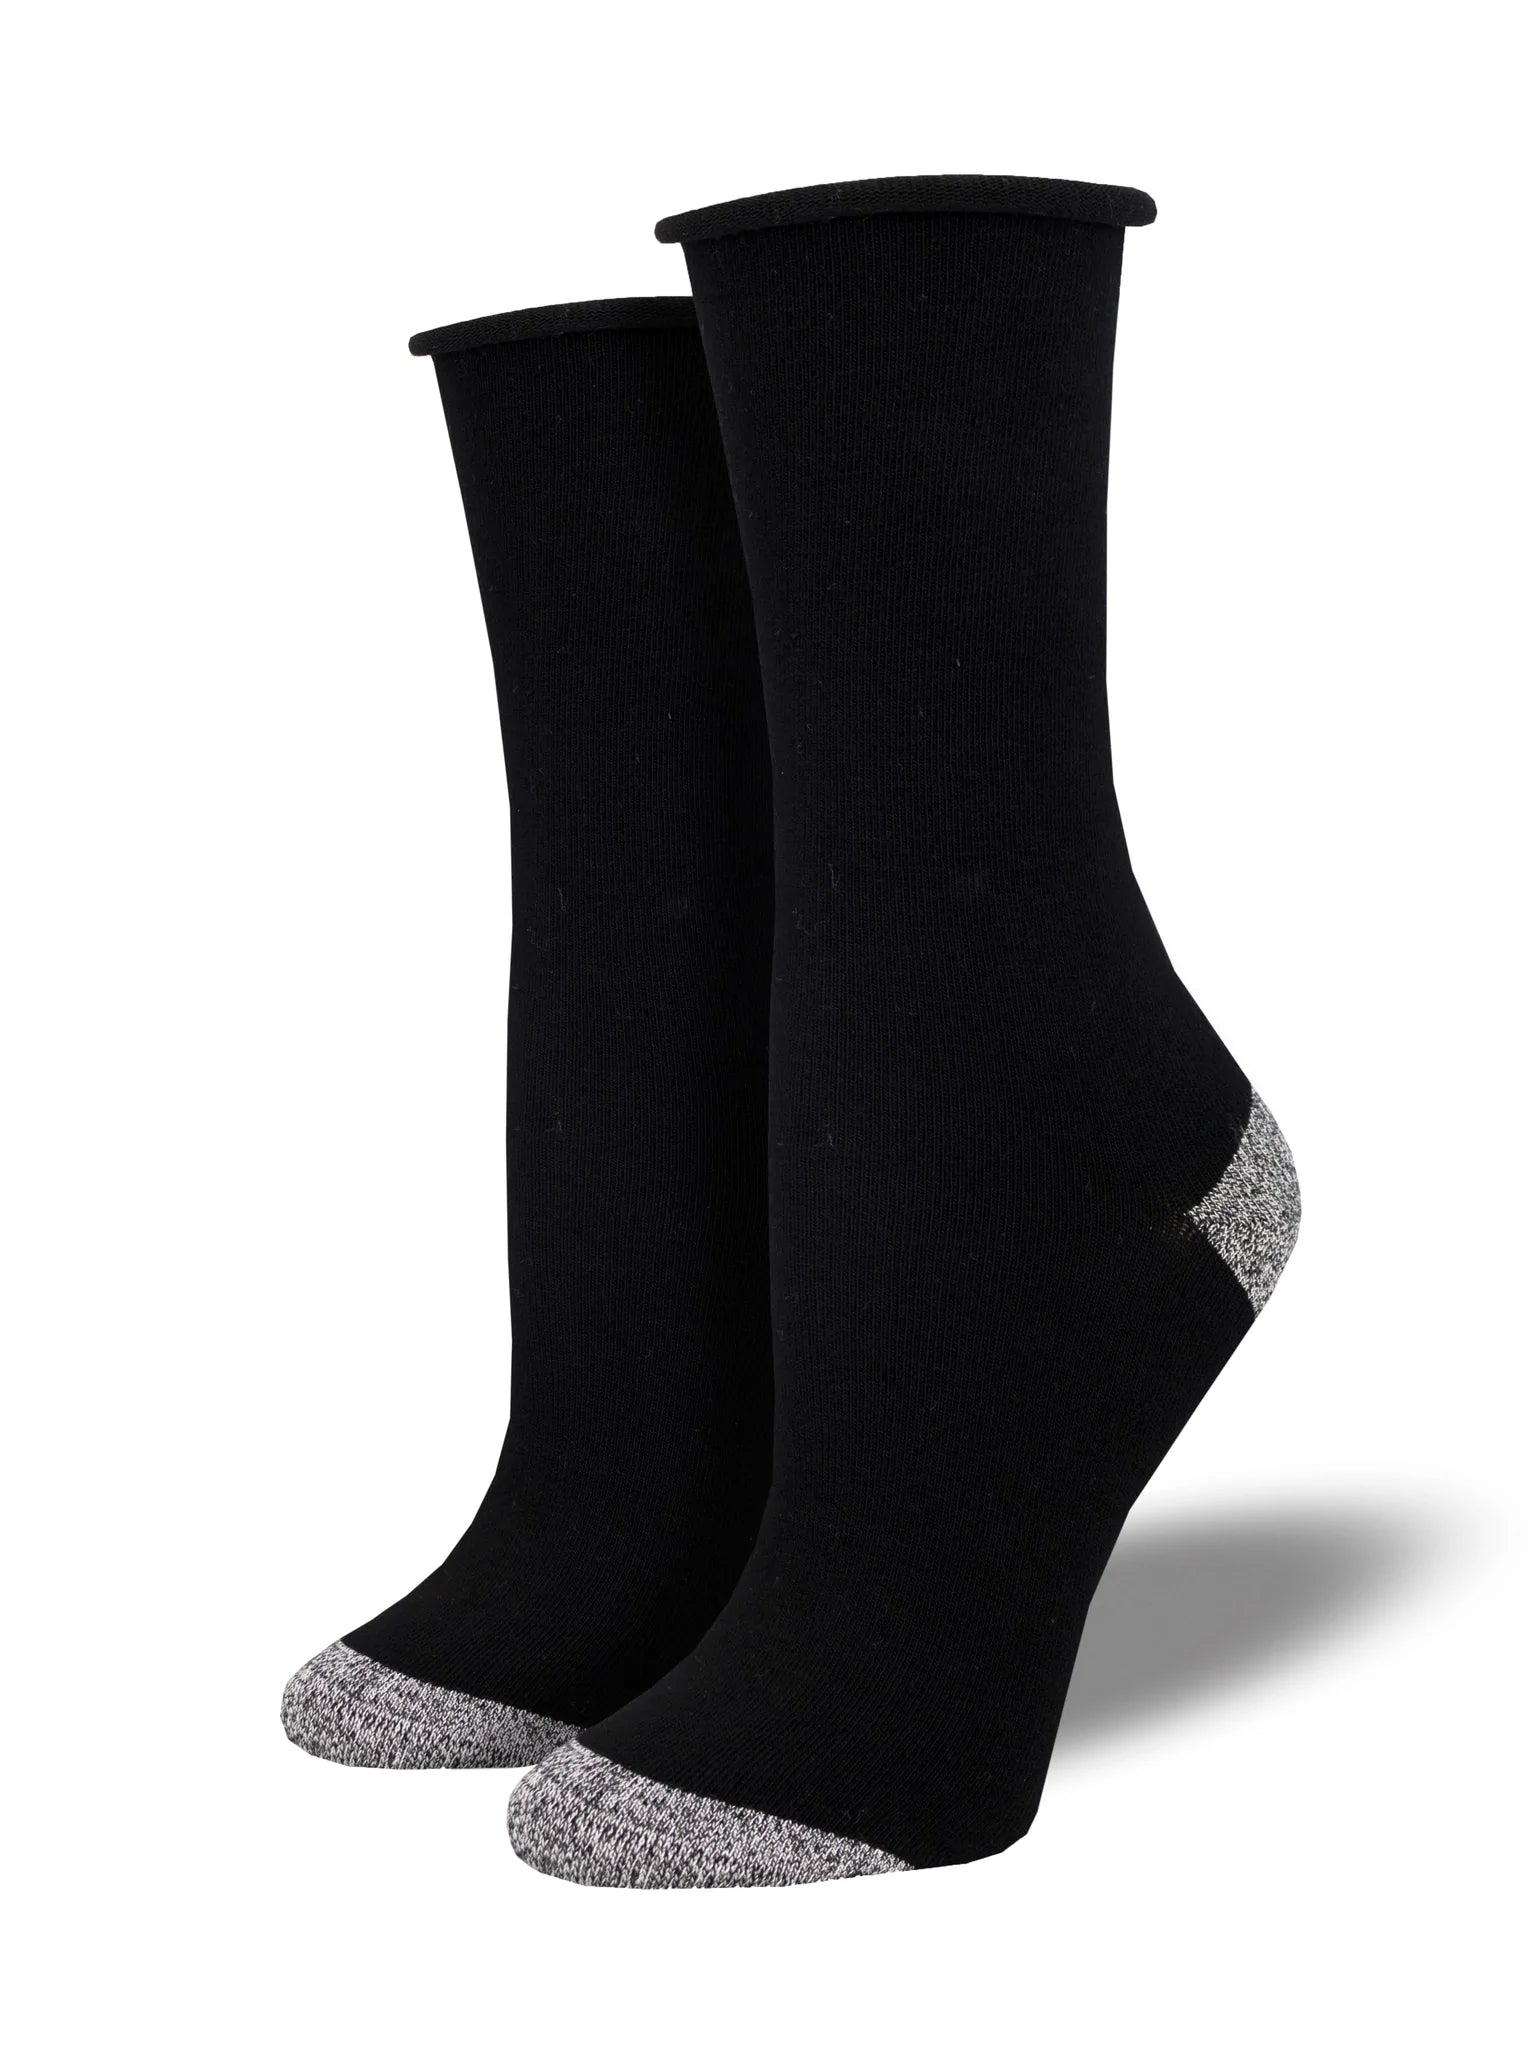 Contrast Heel-Toe | Bamboo | Black - Socks - Socksmith